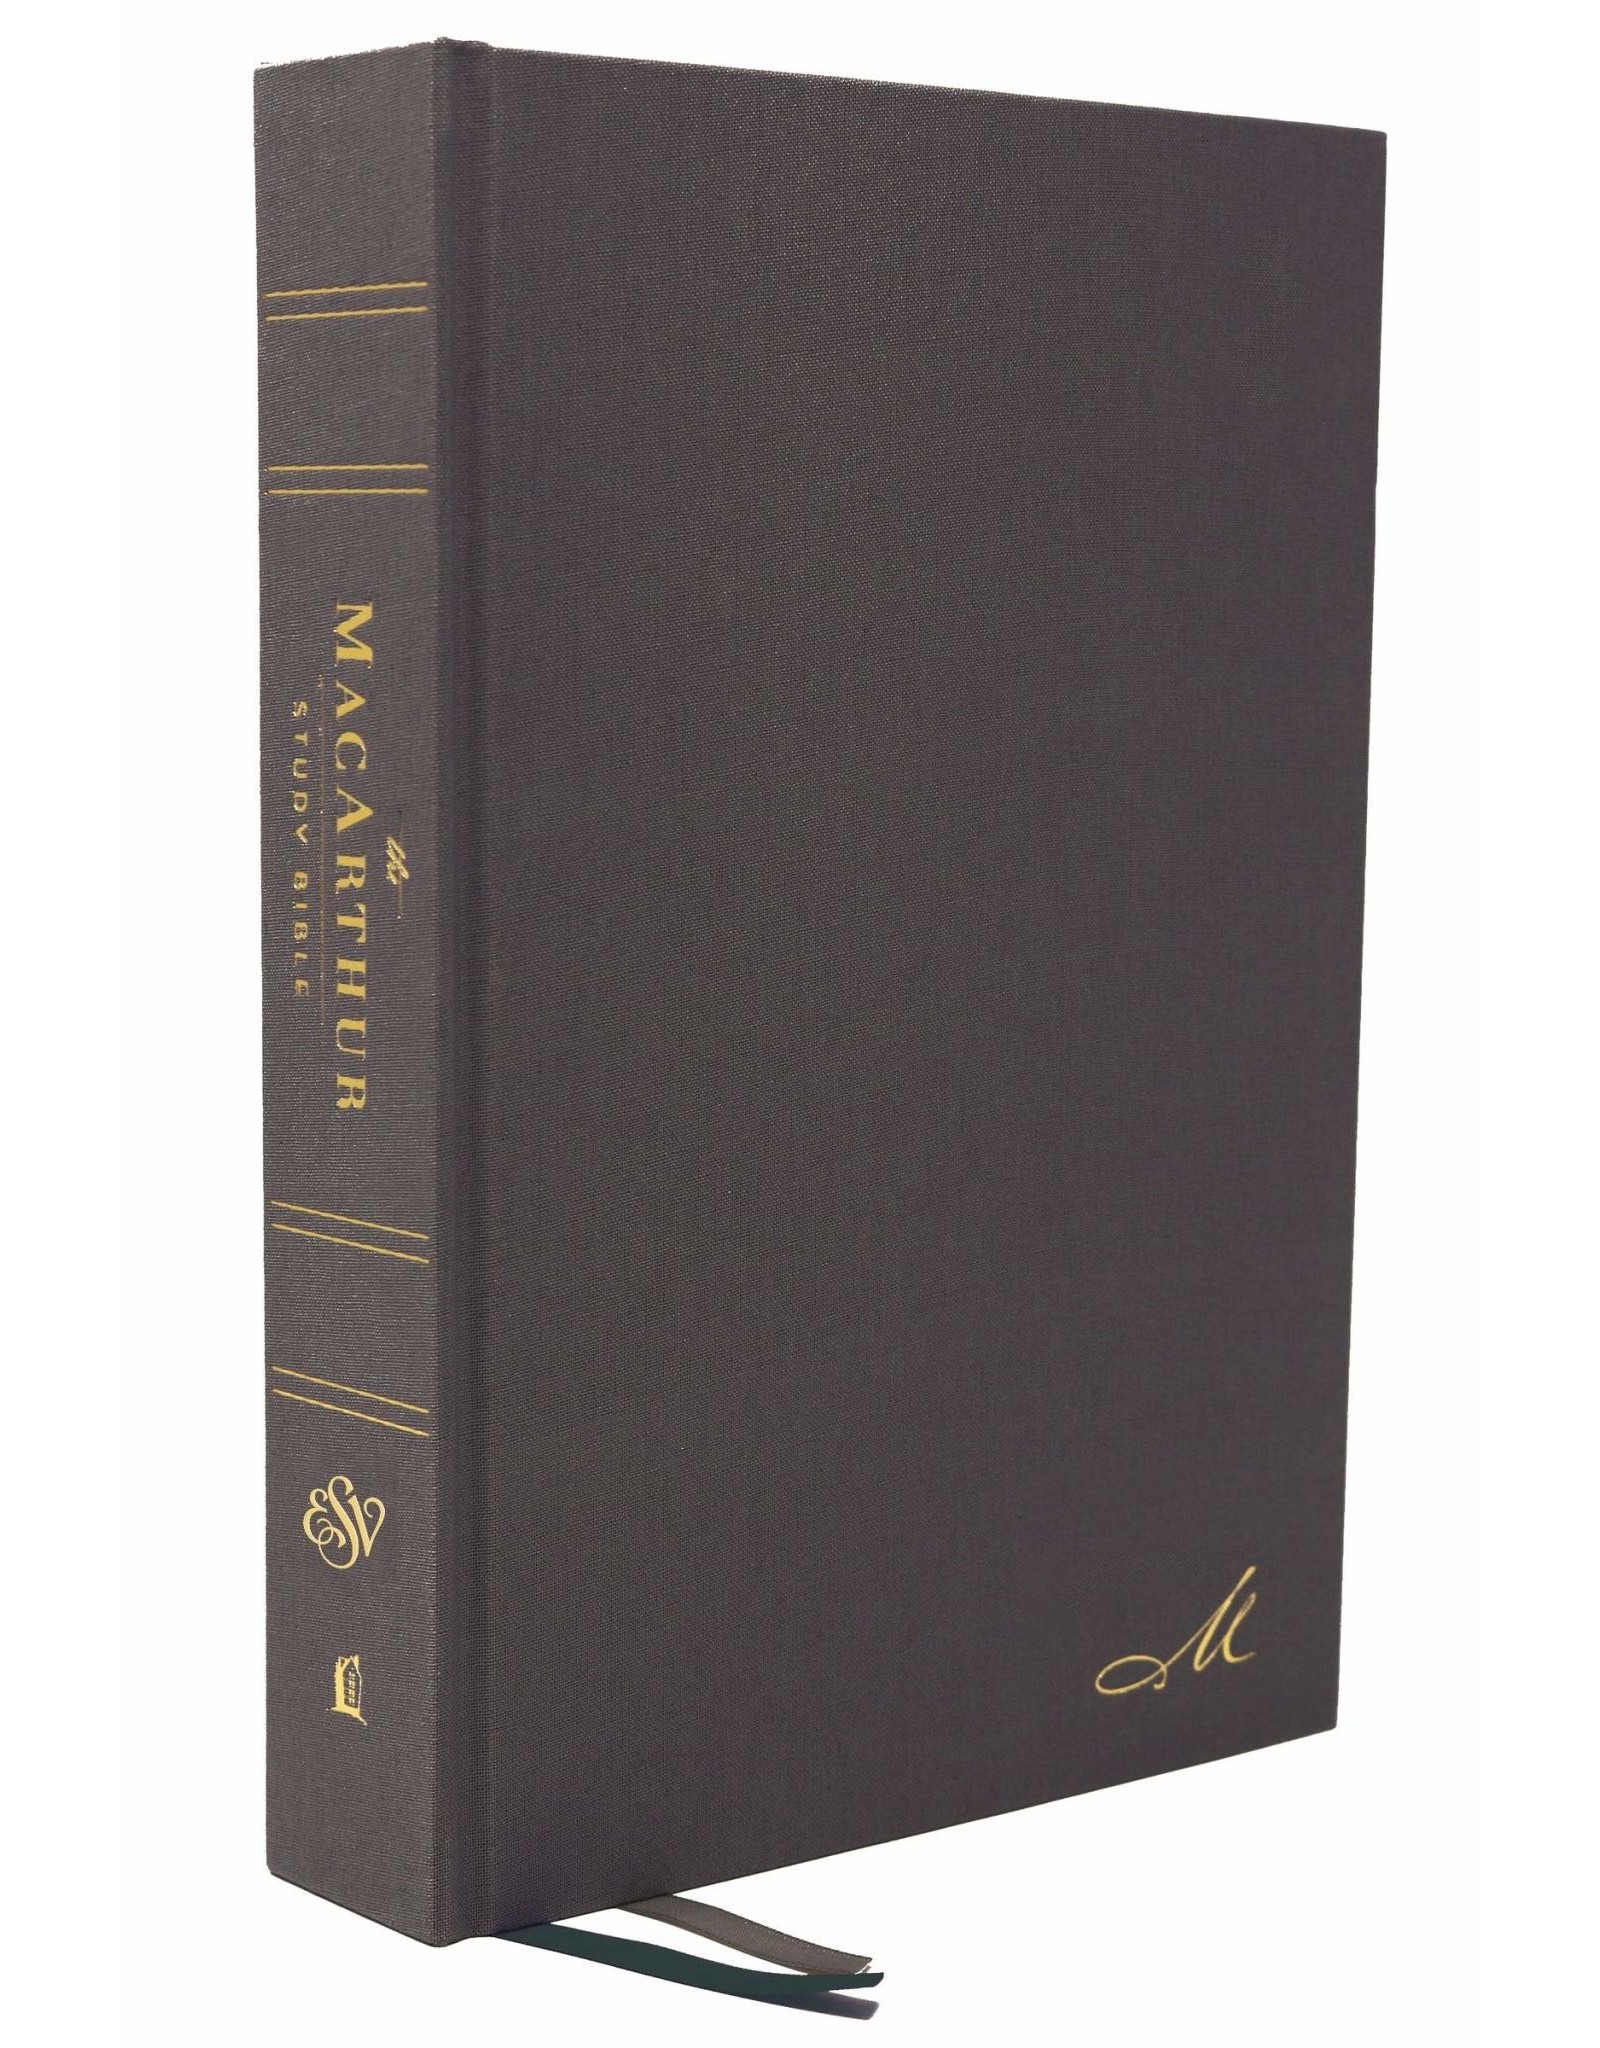 Harper Collins / Thomas Nelson / Zondervan ESV MSB MacArthur Study Bible (2nd Edition, Hardcover)